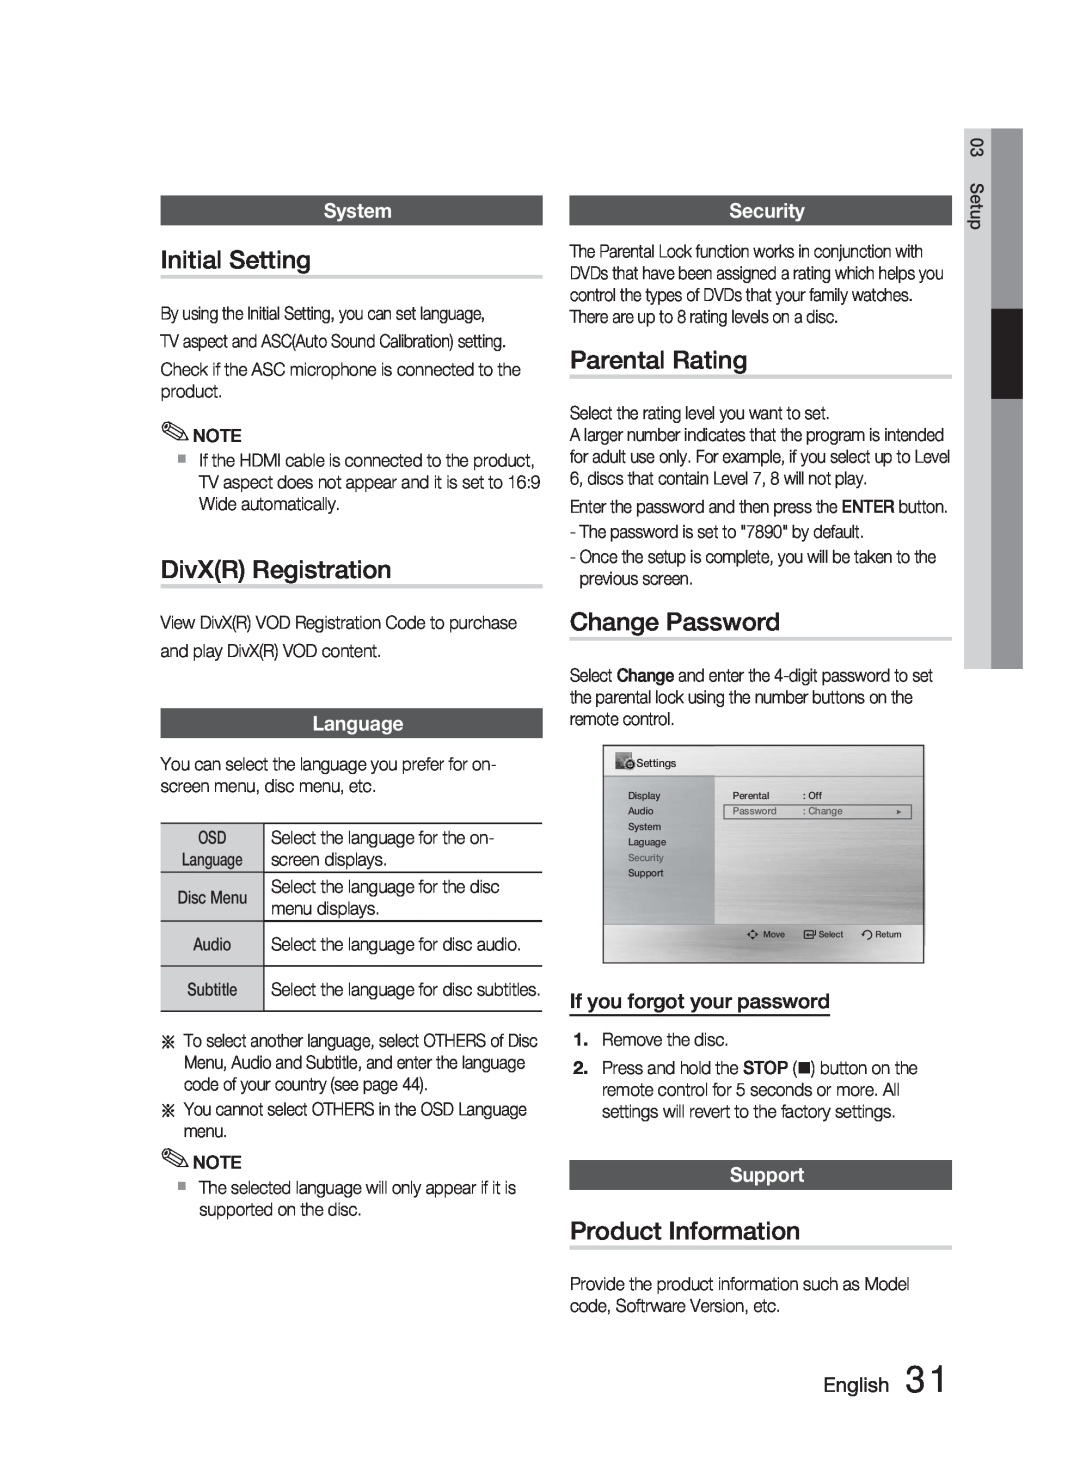 Samsung HT-C550-XAC Initial Setting, DivXR Registration, Parental Rating, Change Password, Product Information, System 